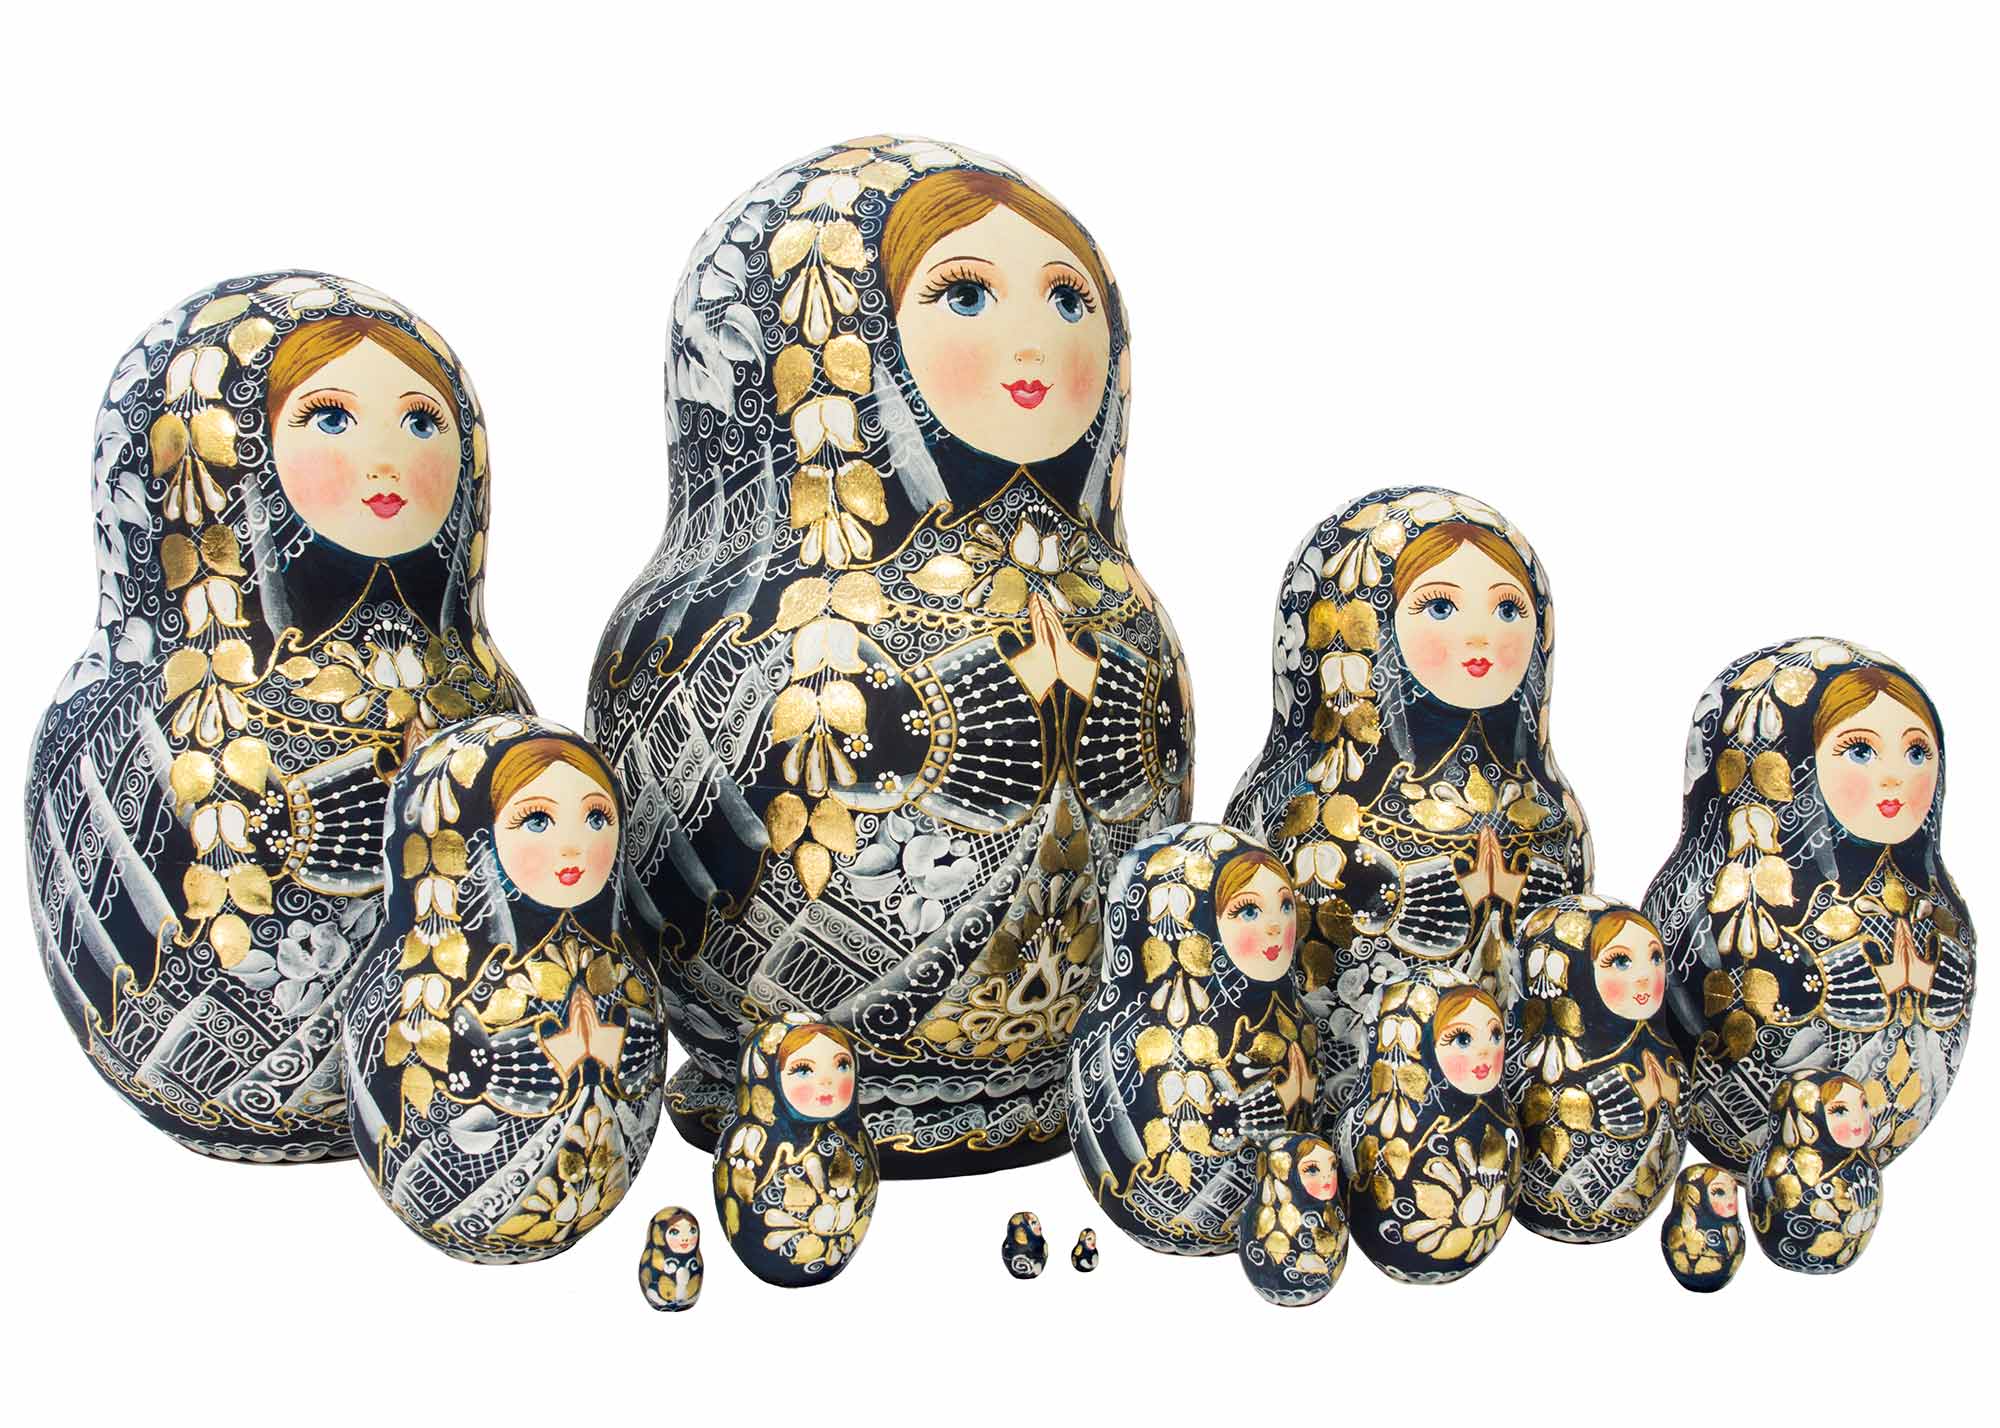 Buy Golden Lace Nesting Doll 15pc./8" at GoldenCockerel.com